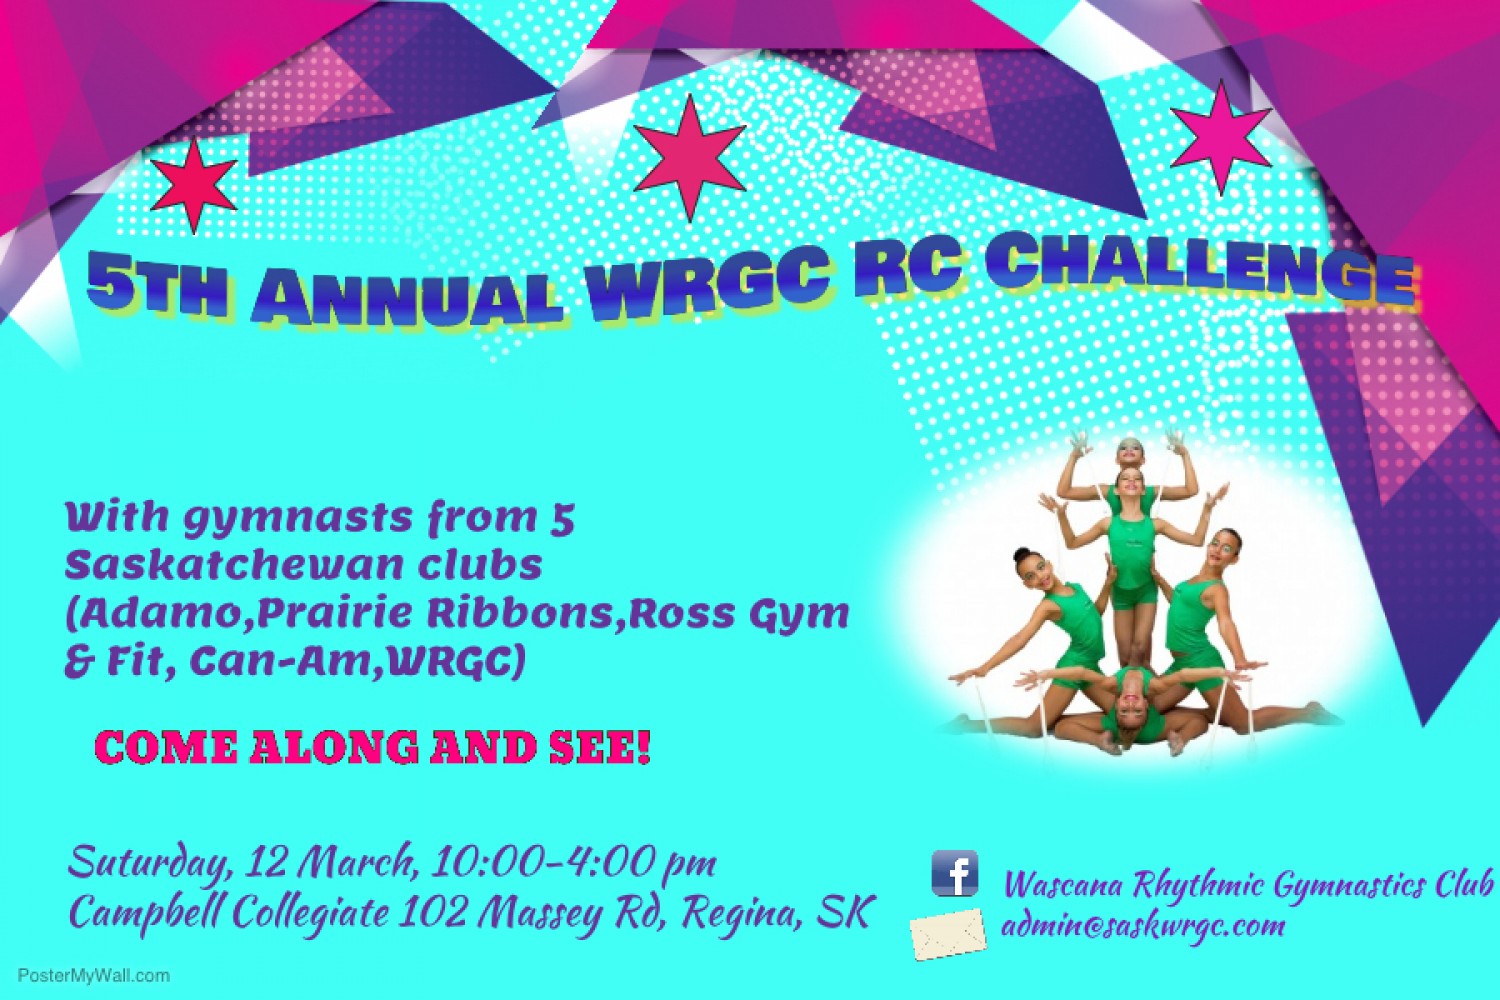 The WRGC Rhythm Cat Invitational is this Saturday!